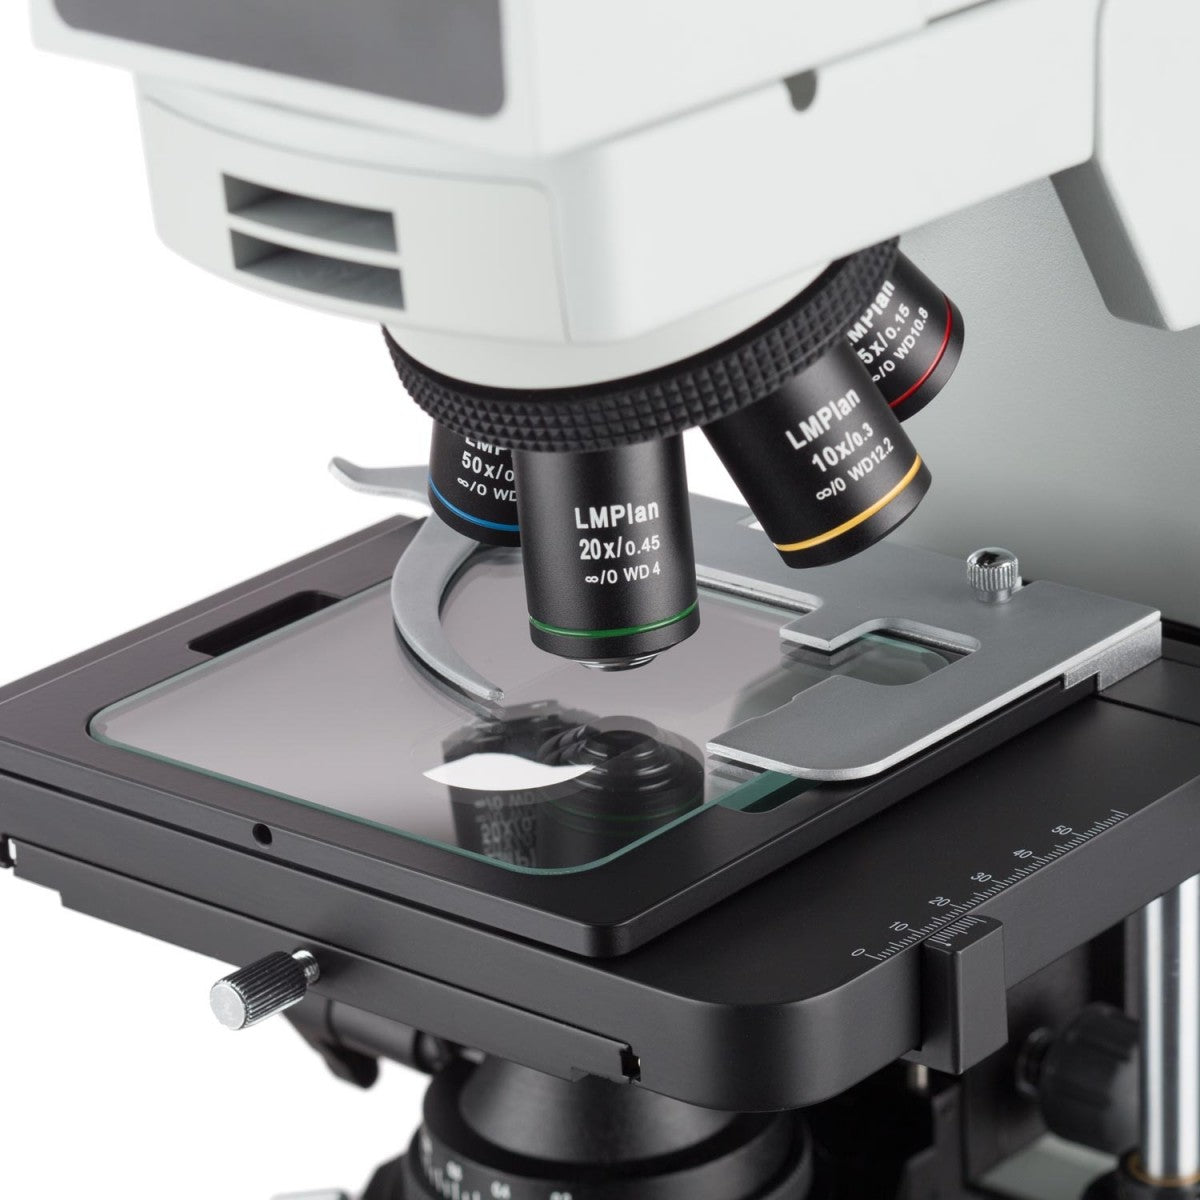 AmScope 50X-500X Metallurgical Microscope with Enhanced Optics and Dual Illumination + 9MP Global Shutter Camera